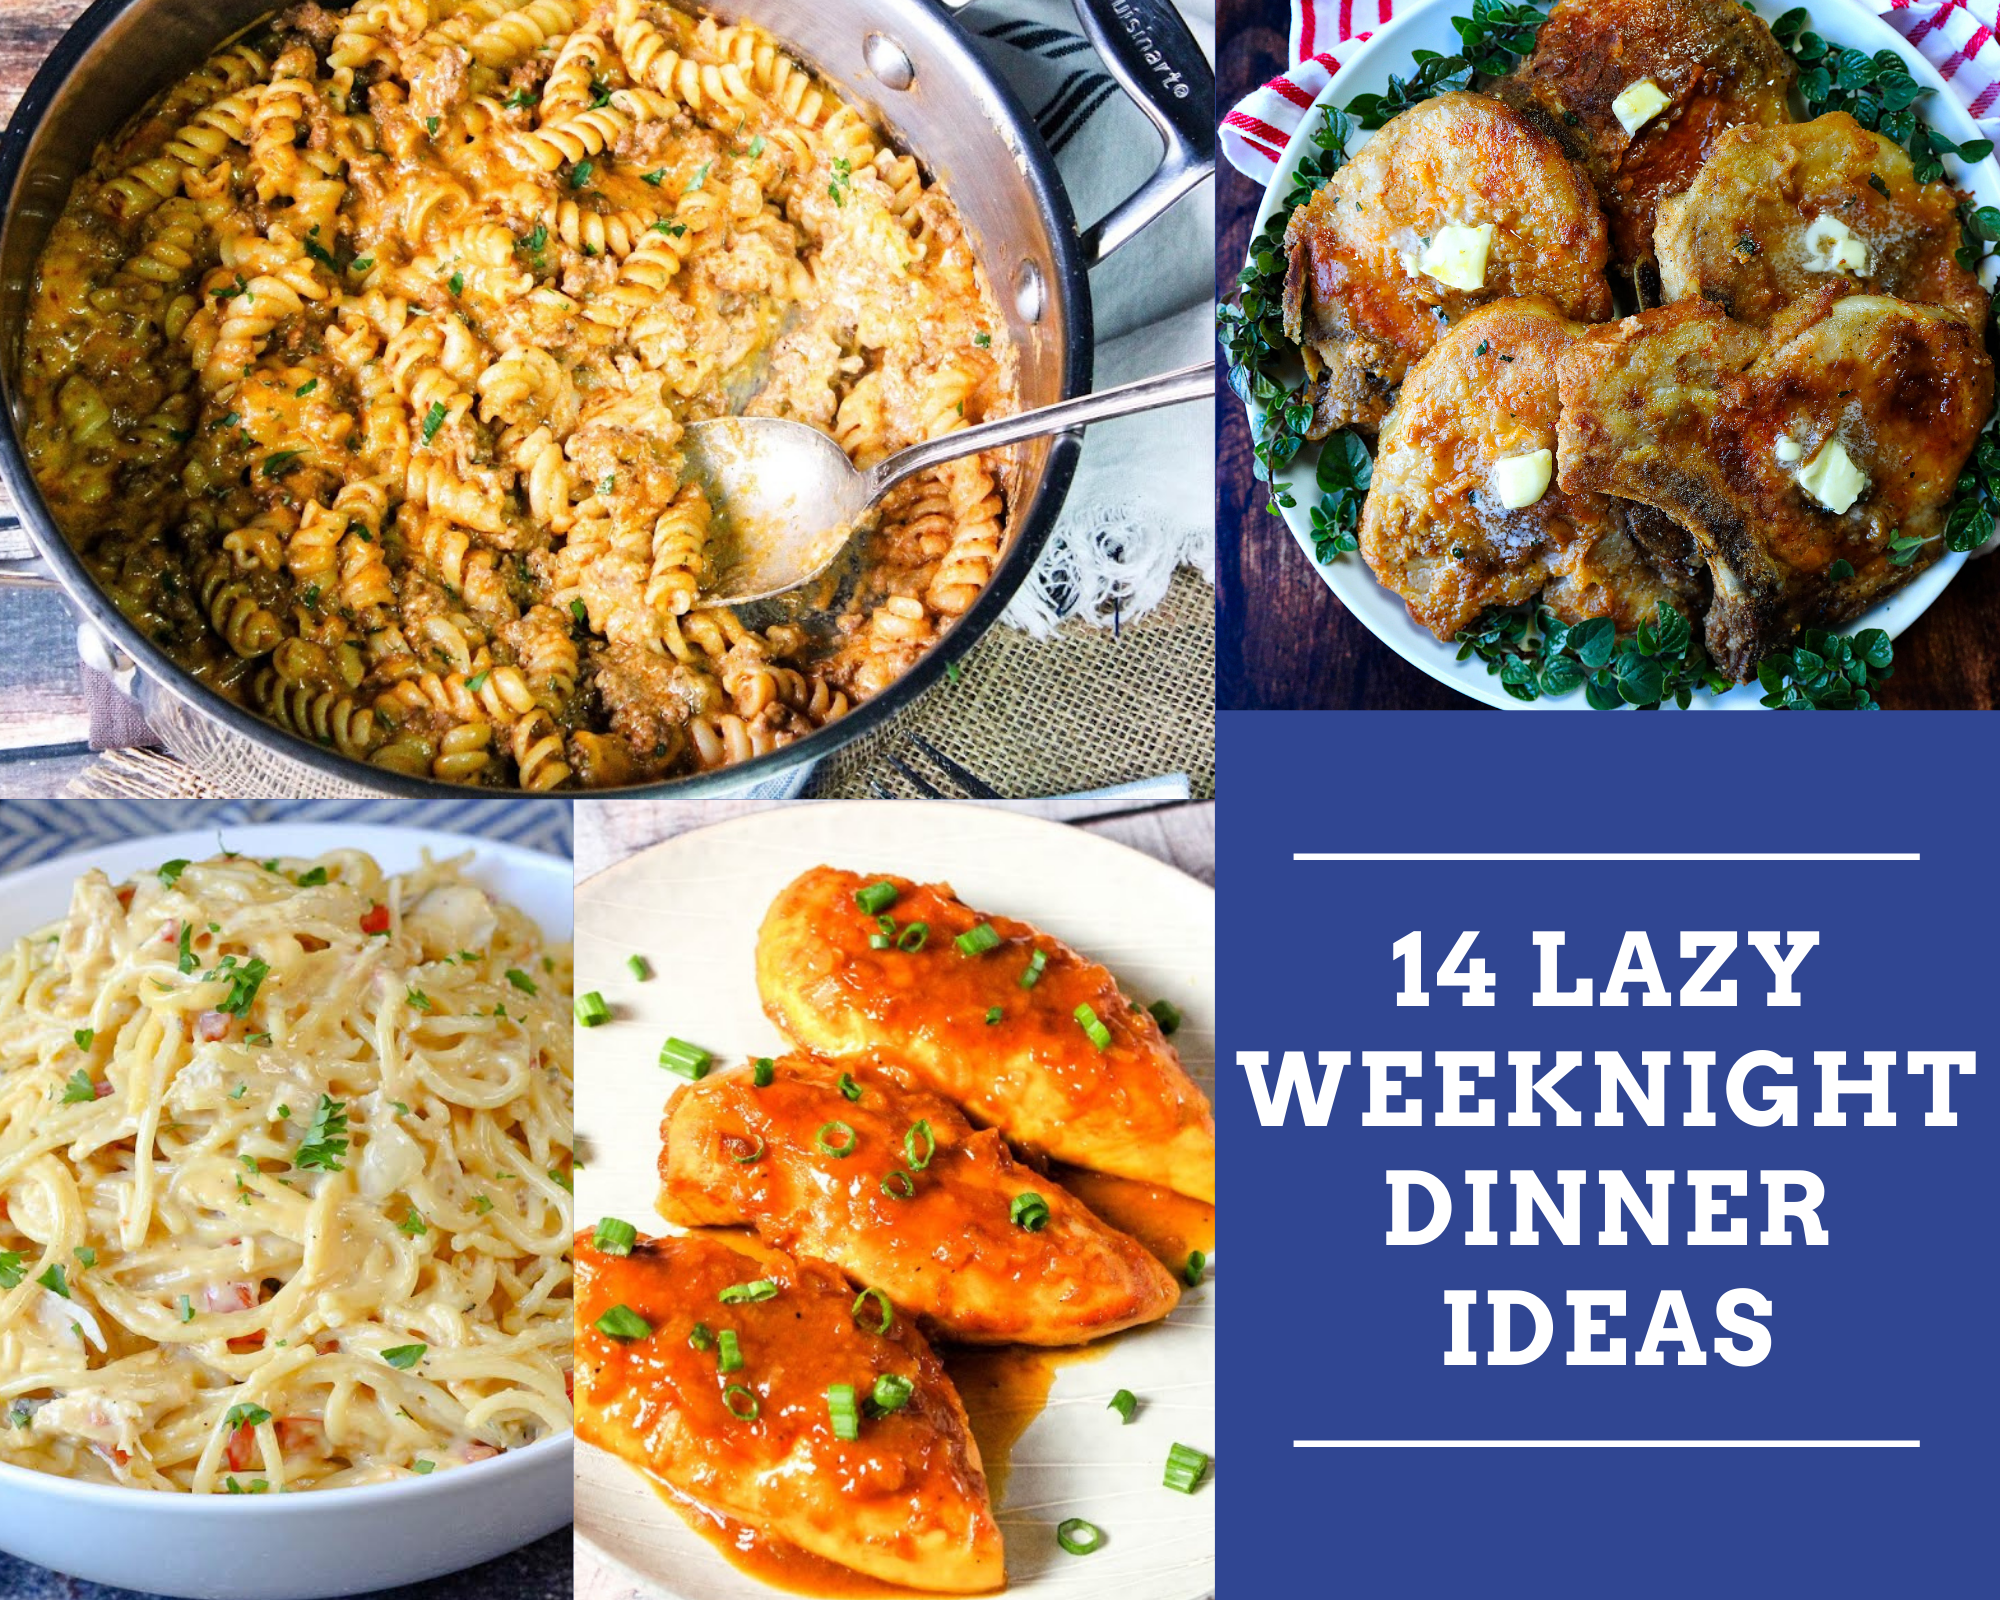 14 Lazy Weeknight Dinner Ideas